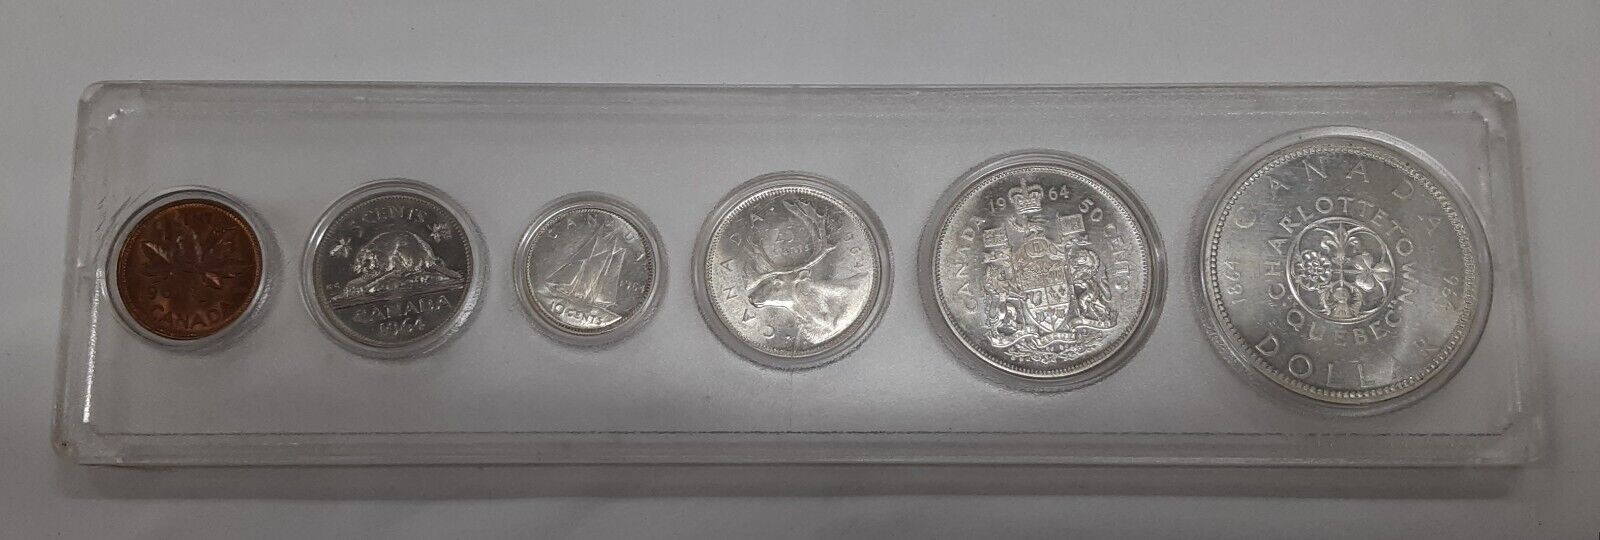 1964 Canada 6 Coin Mint Set of Queen Elizabeth II BU in Whitman Holder